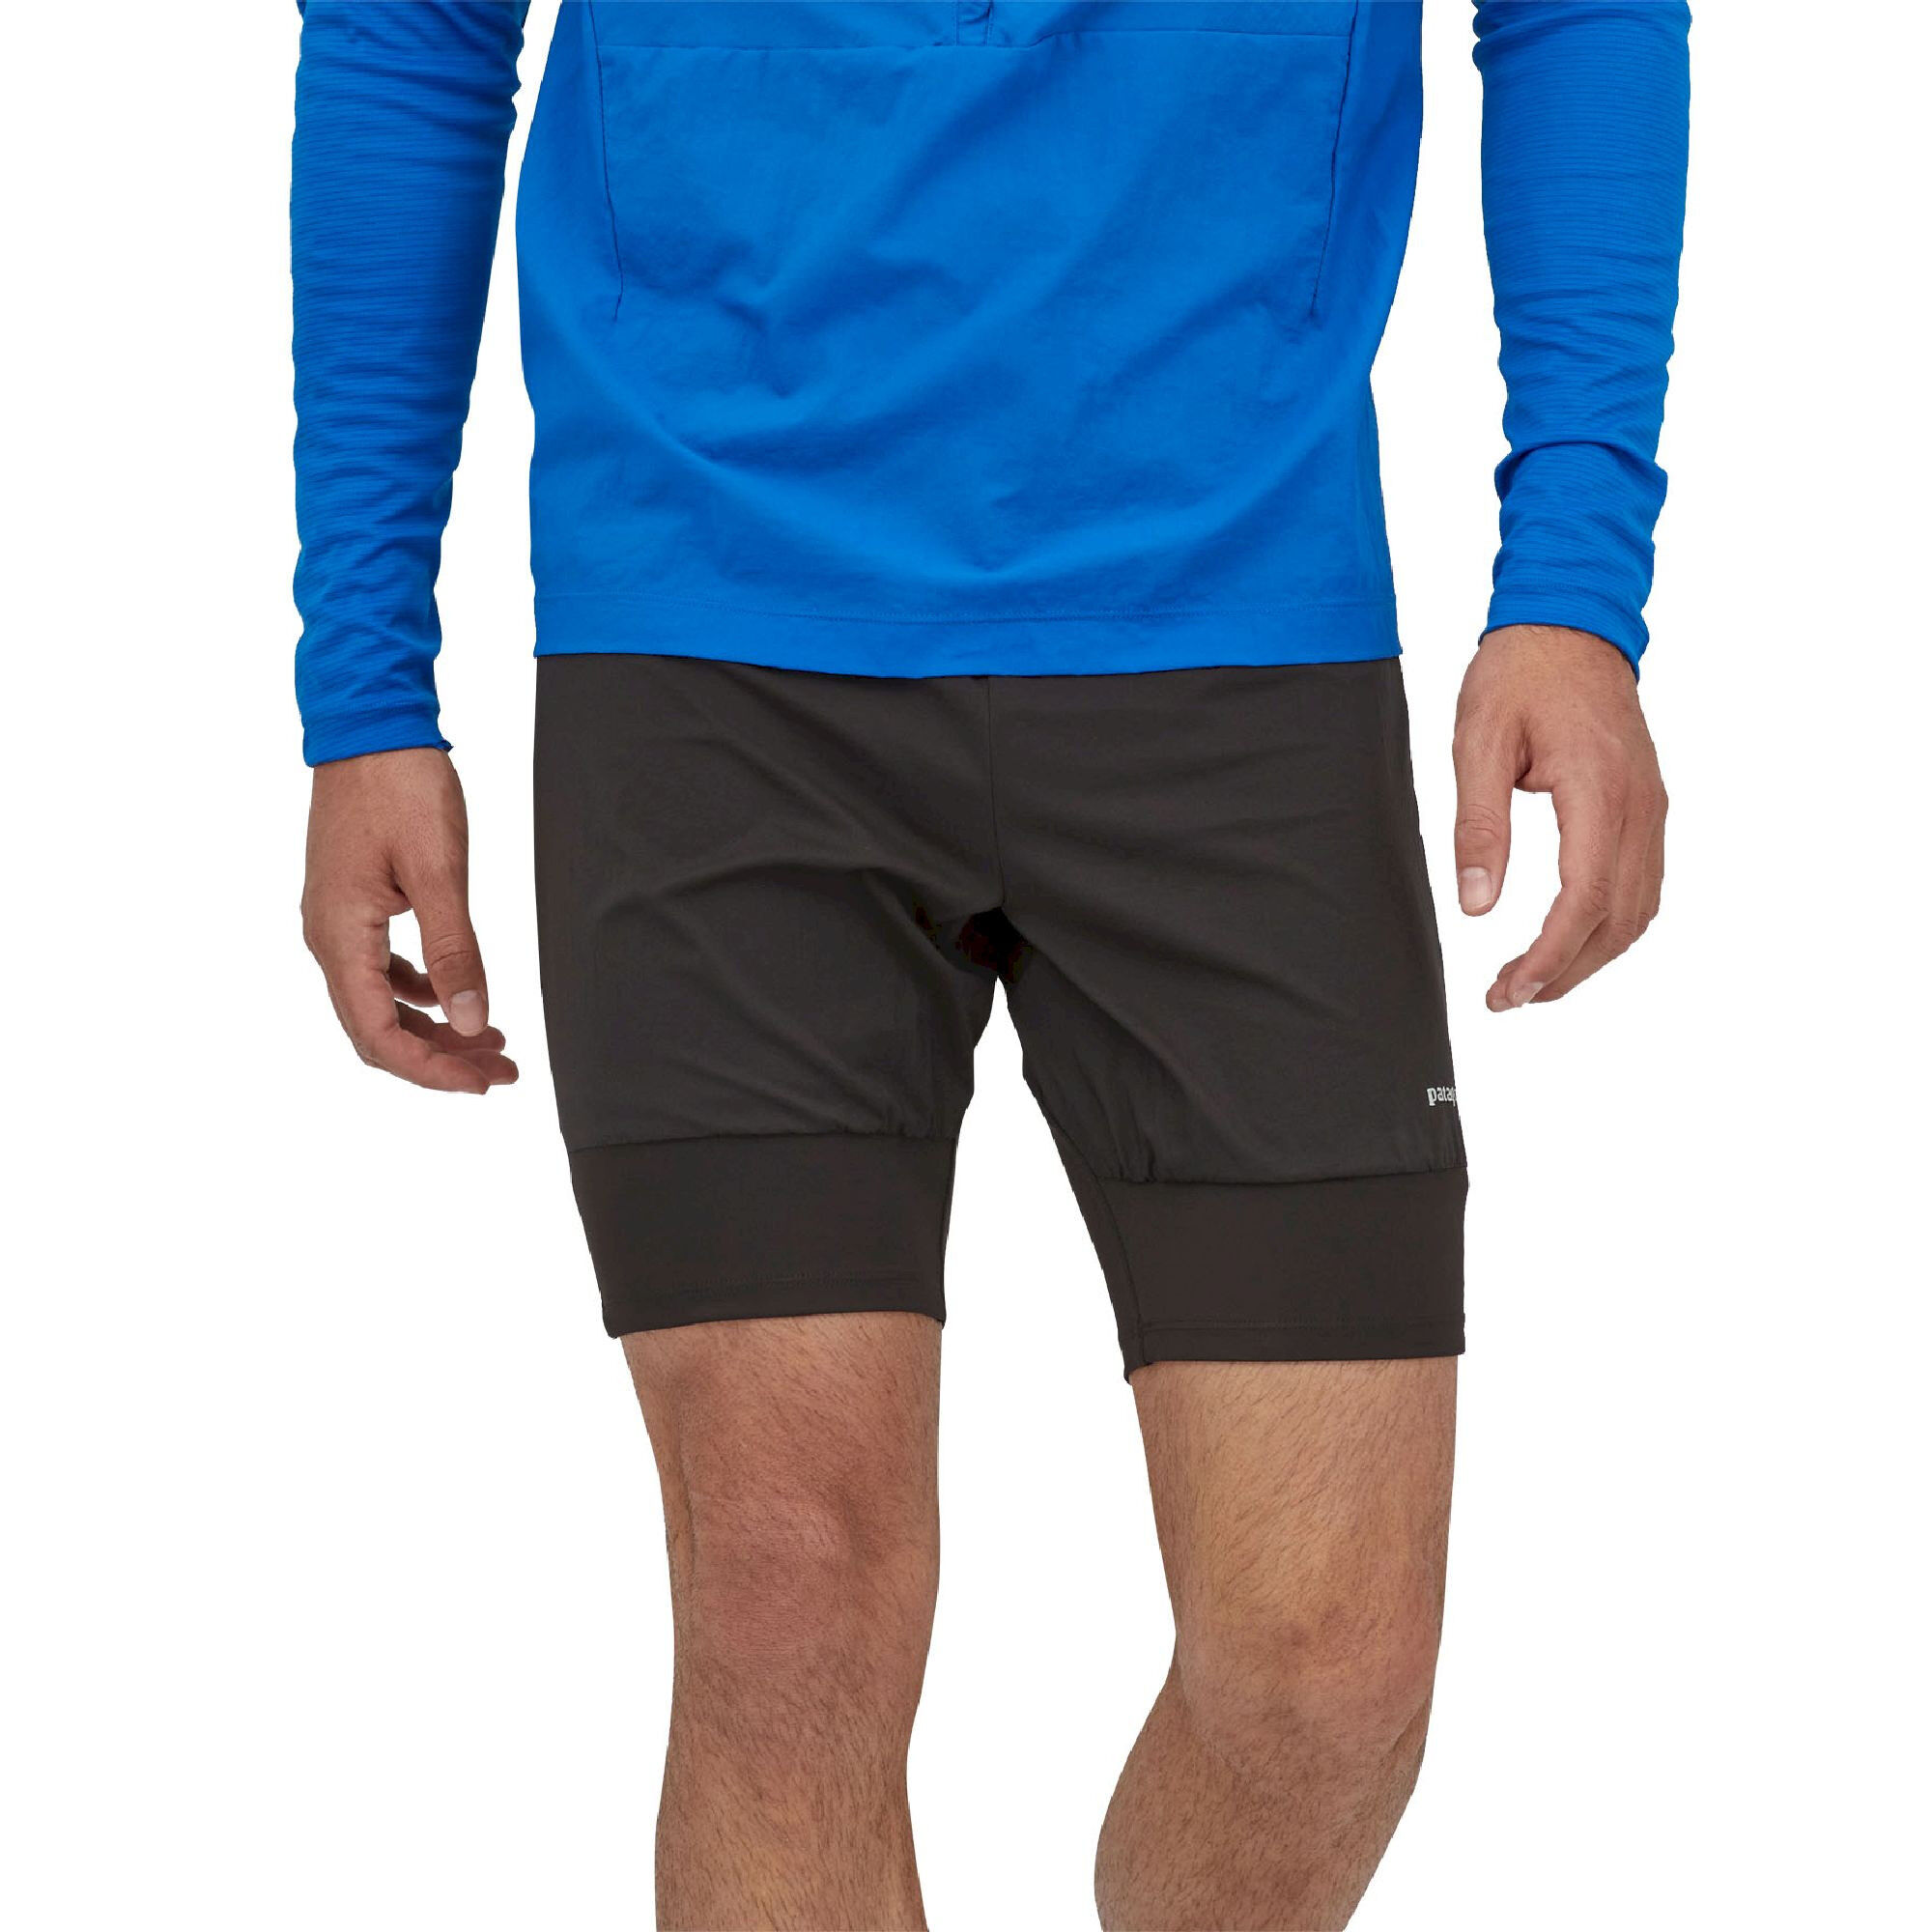 Patagonia Endless Run Shorts - Running shorts - Men's